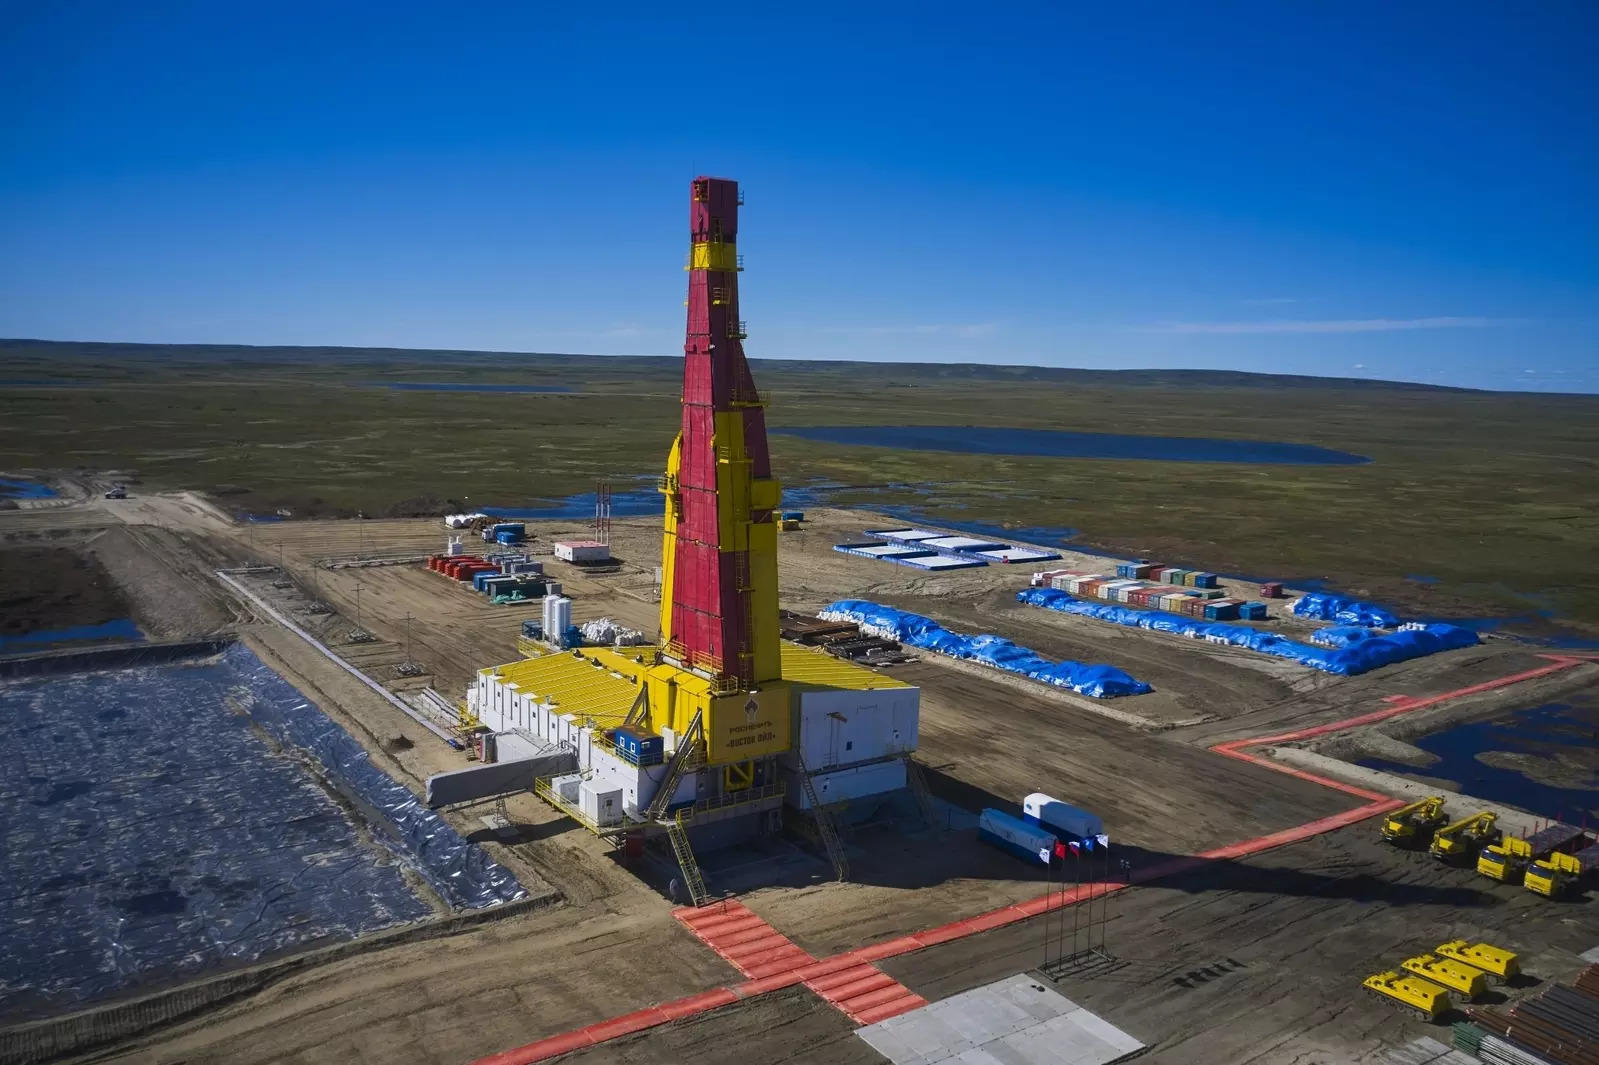 Rosneft starts production drilling at Payakhskoye field of Vostok Oil  project, ET EnergyWorld